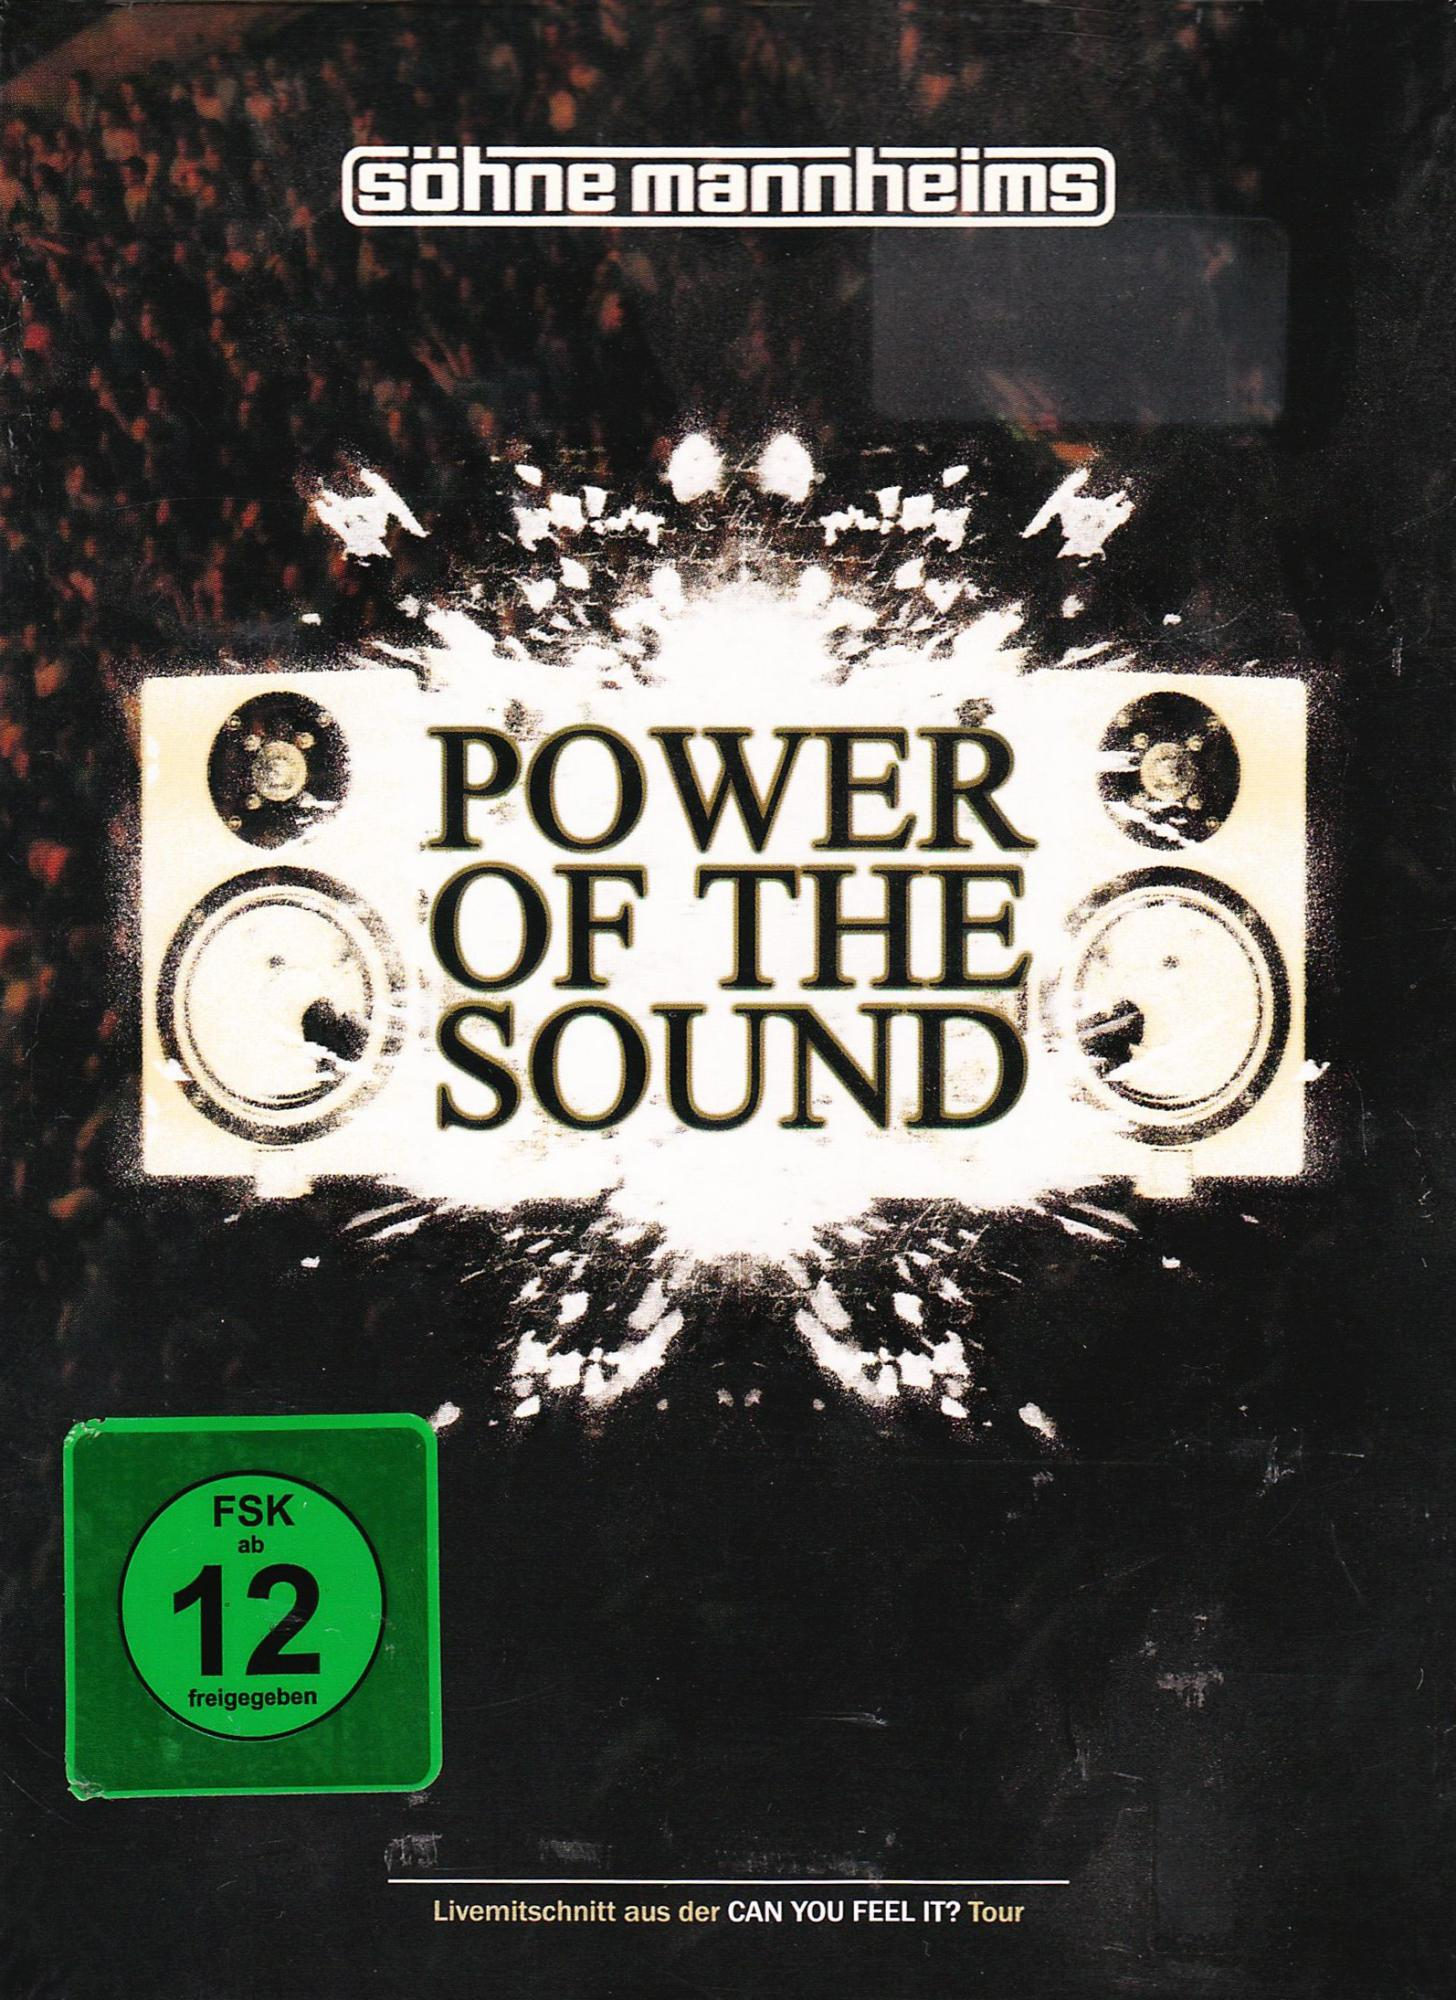 - Power - Of Sound Mannheims Söhne - Mannheims The (DVD) Söhne